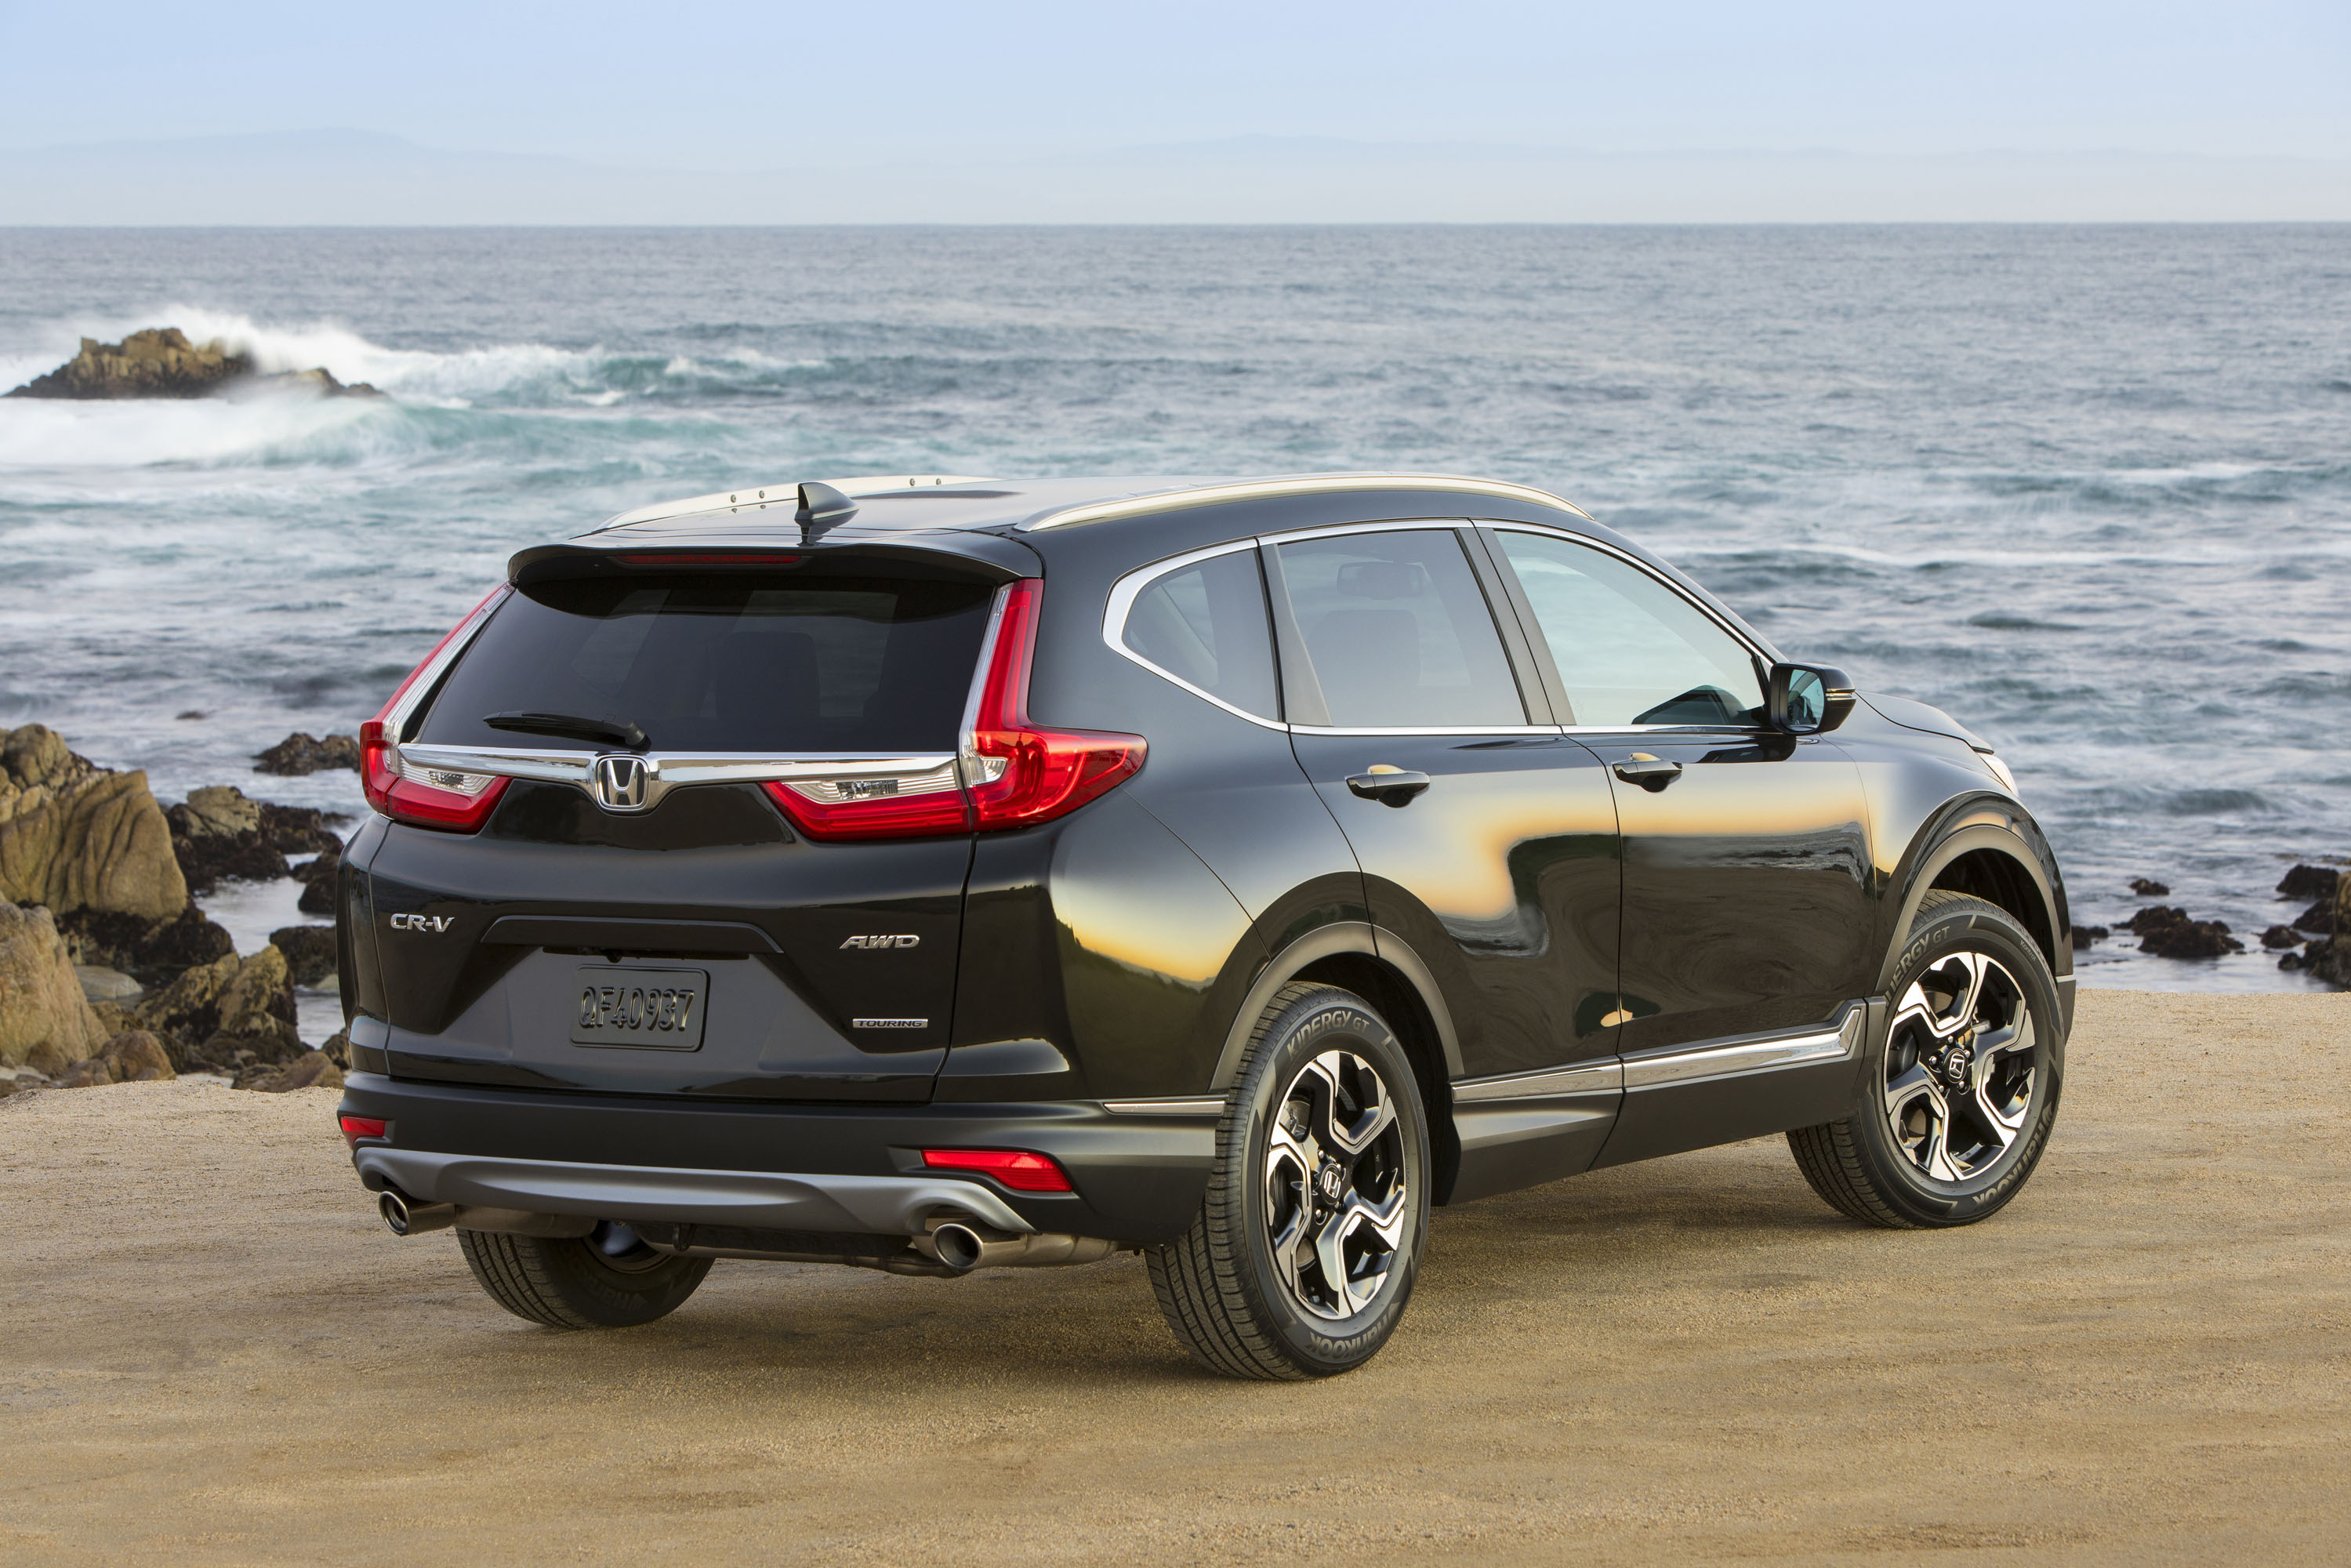 119K 2019 Honda CRV crossover SUVs recalled to fix airbags